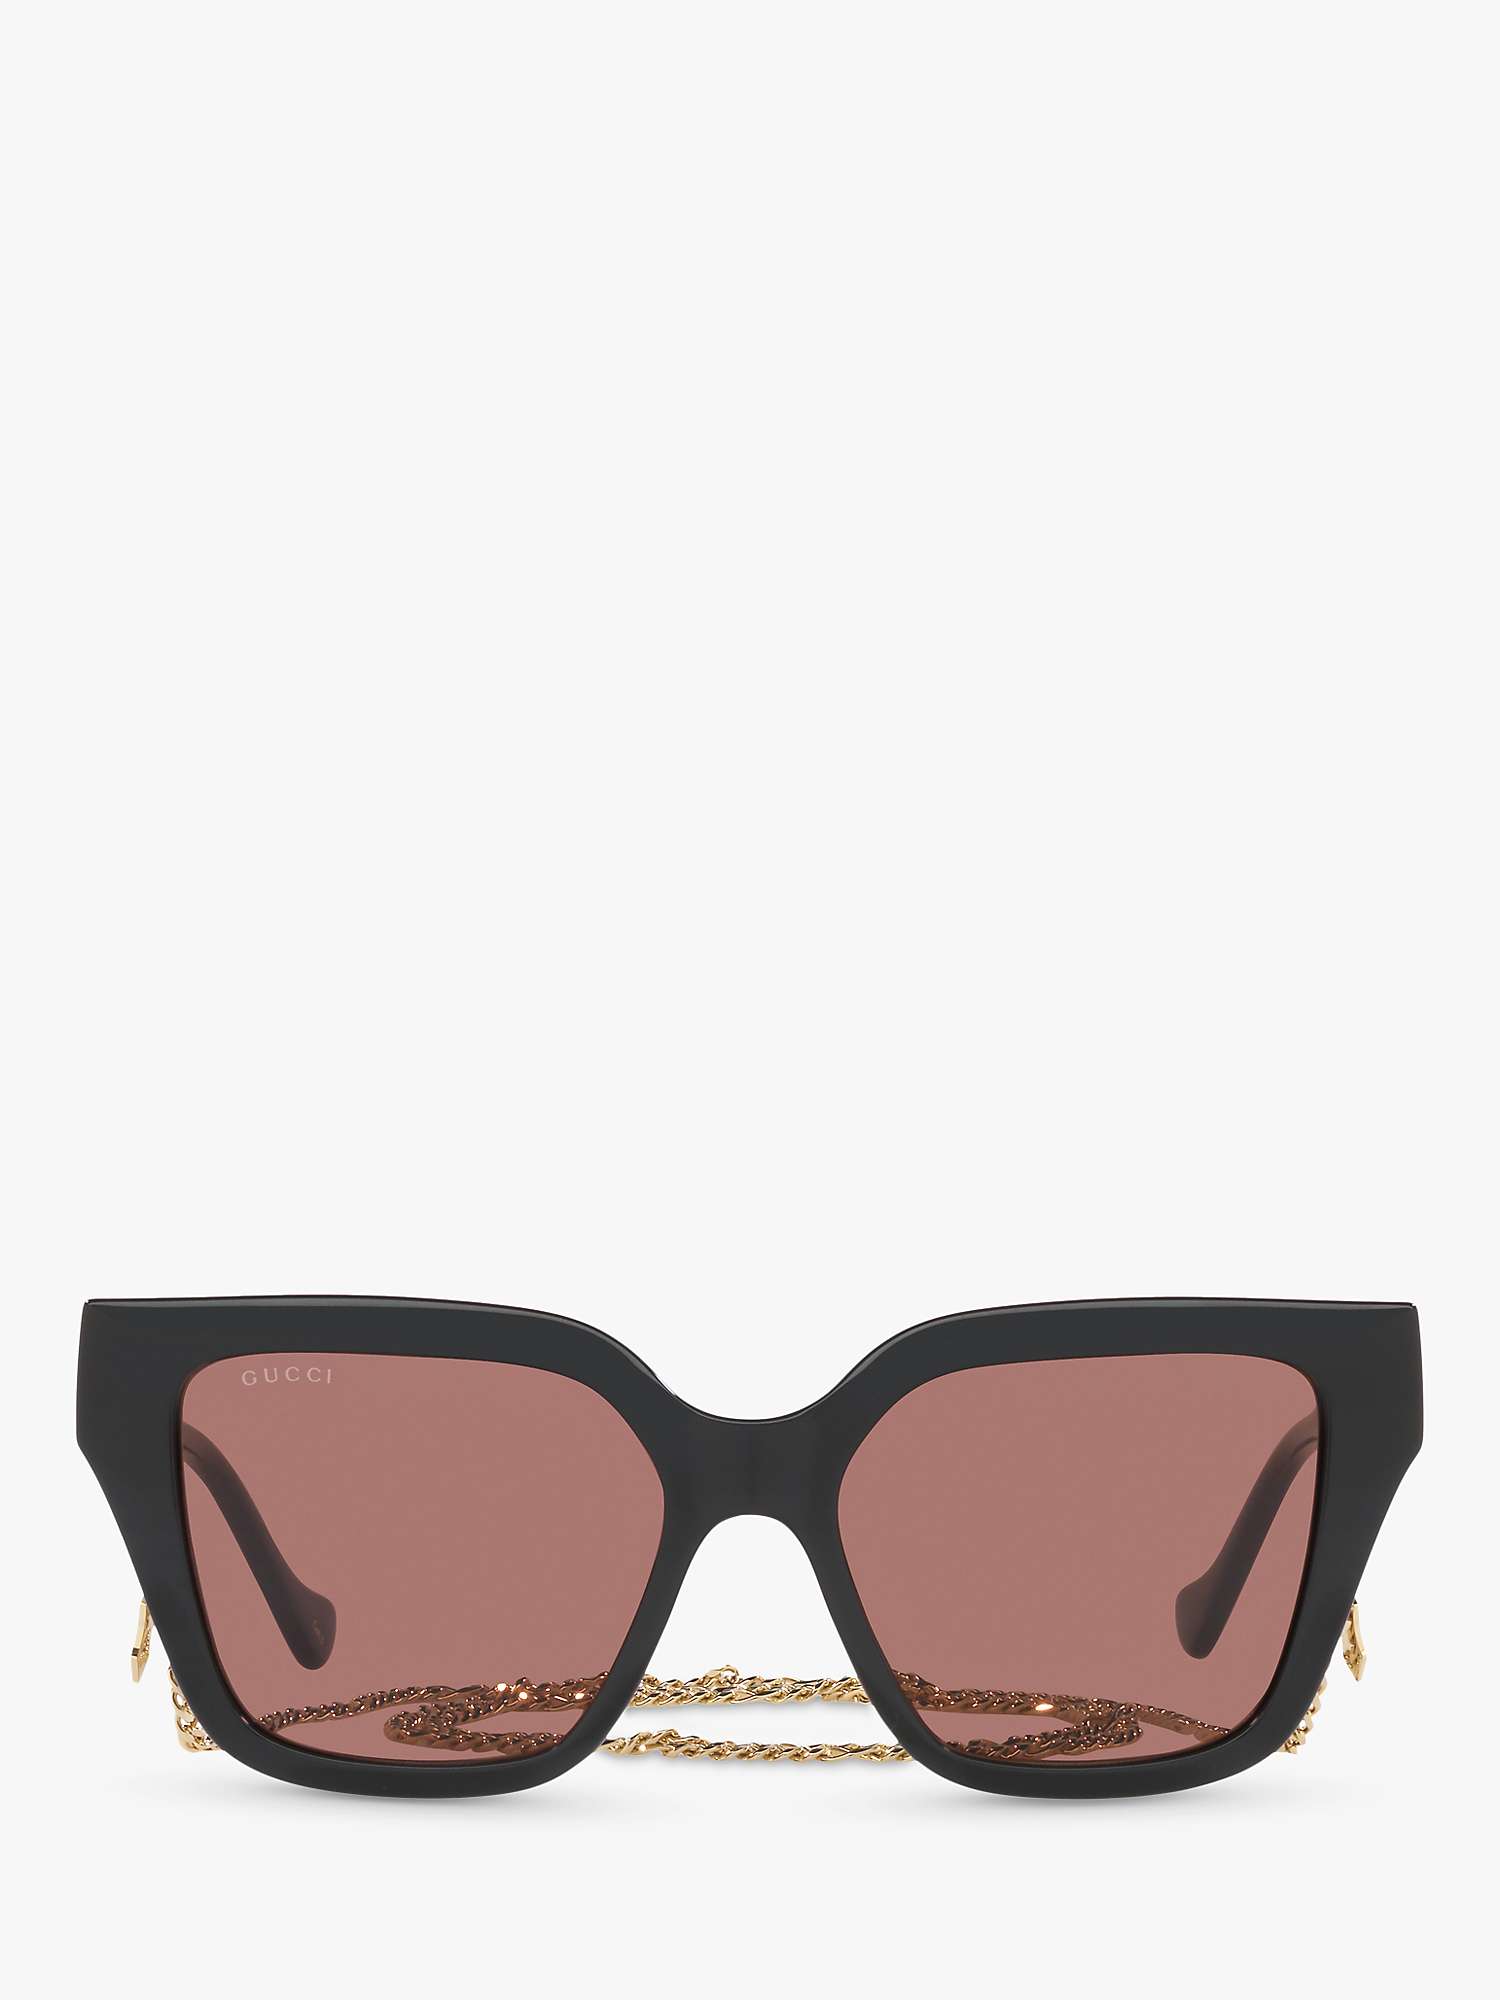 Buy Gucci GG1023S Women's D-Frame Sunglasses, Black/Brown Online at johnlewis.com